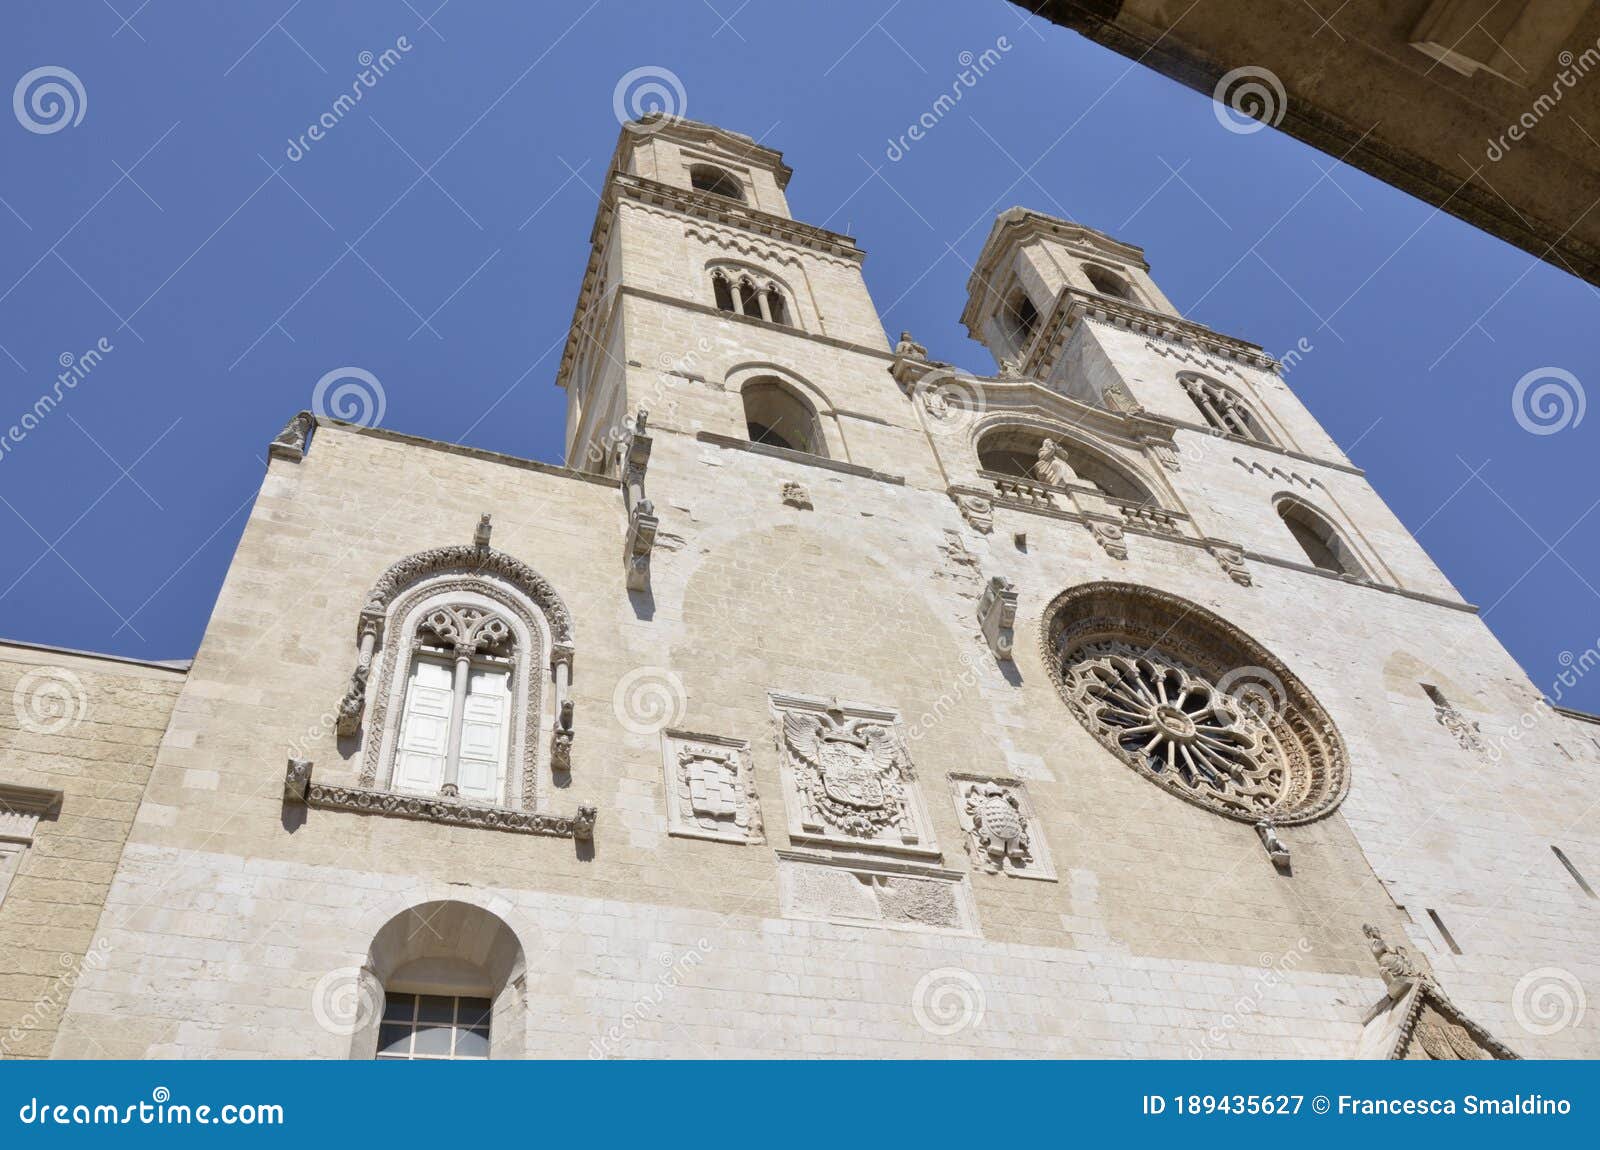 altamura, facade of the cathedral of santa maria assunta